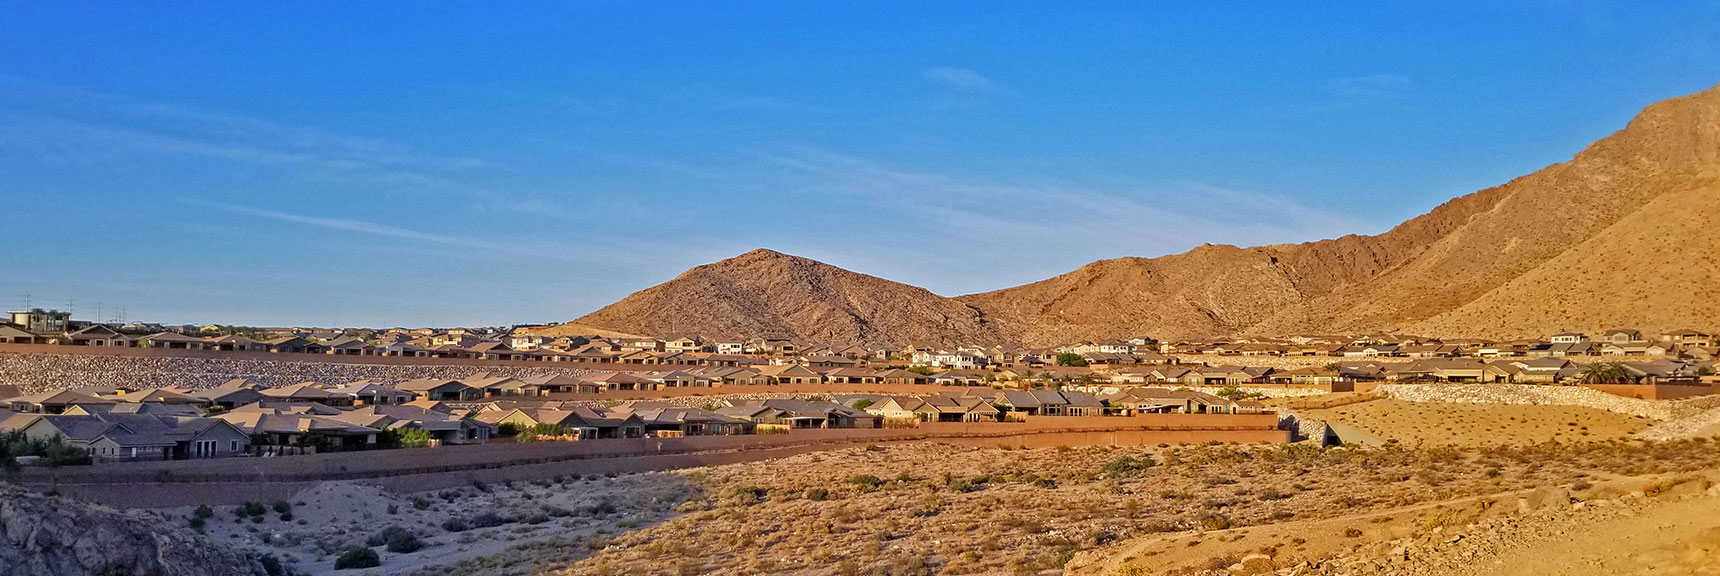 Scoping Out Summerlin Ridge. Reverence Overlook at Base of Ridge. | Cheyenne Mountain | Las Vegas, Nevada